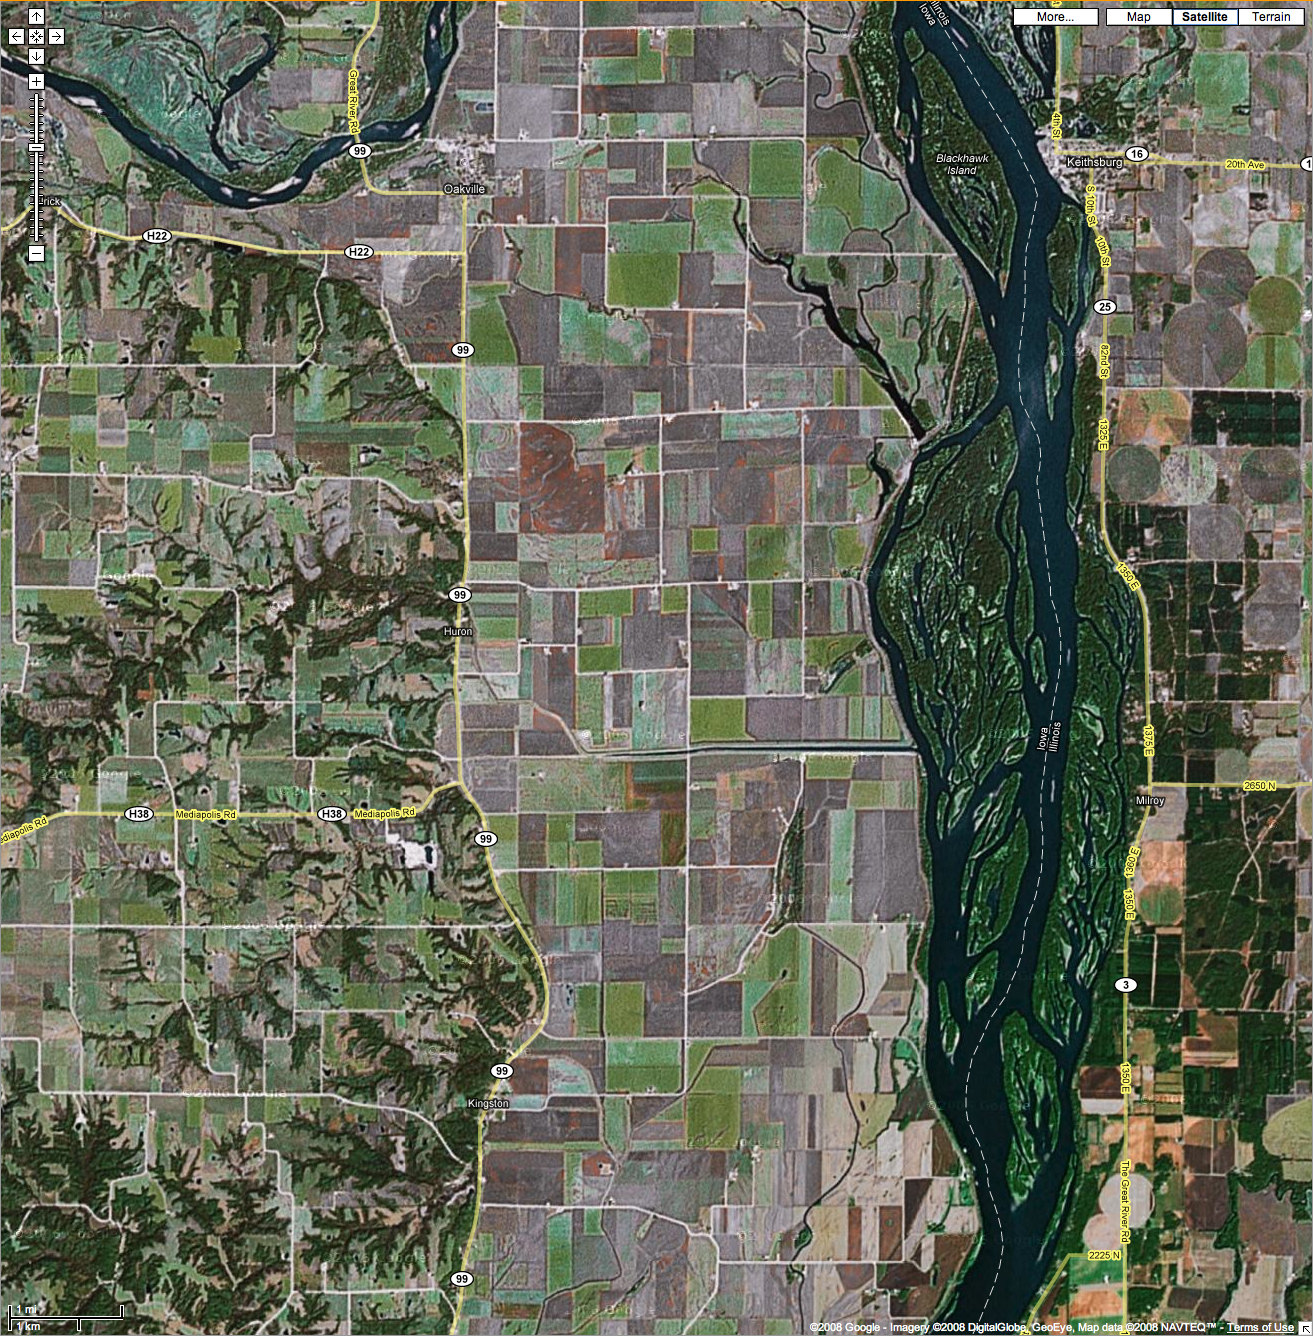 Google Maps satellite image